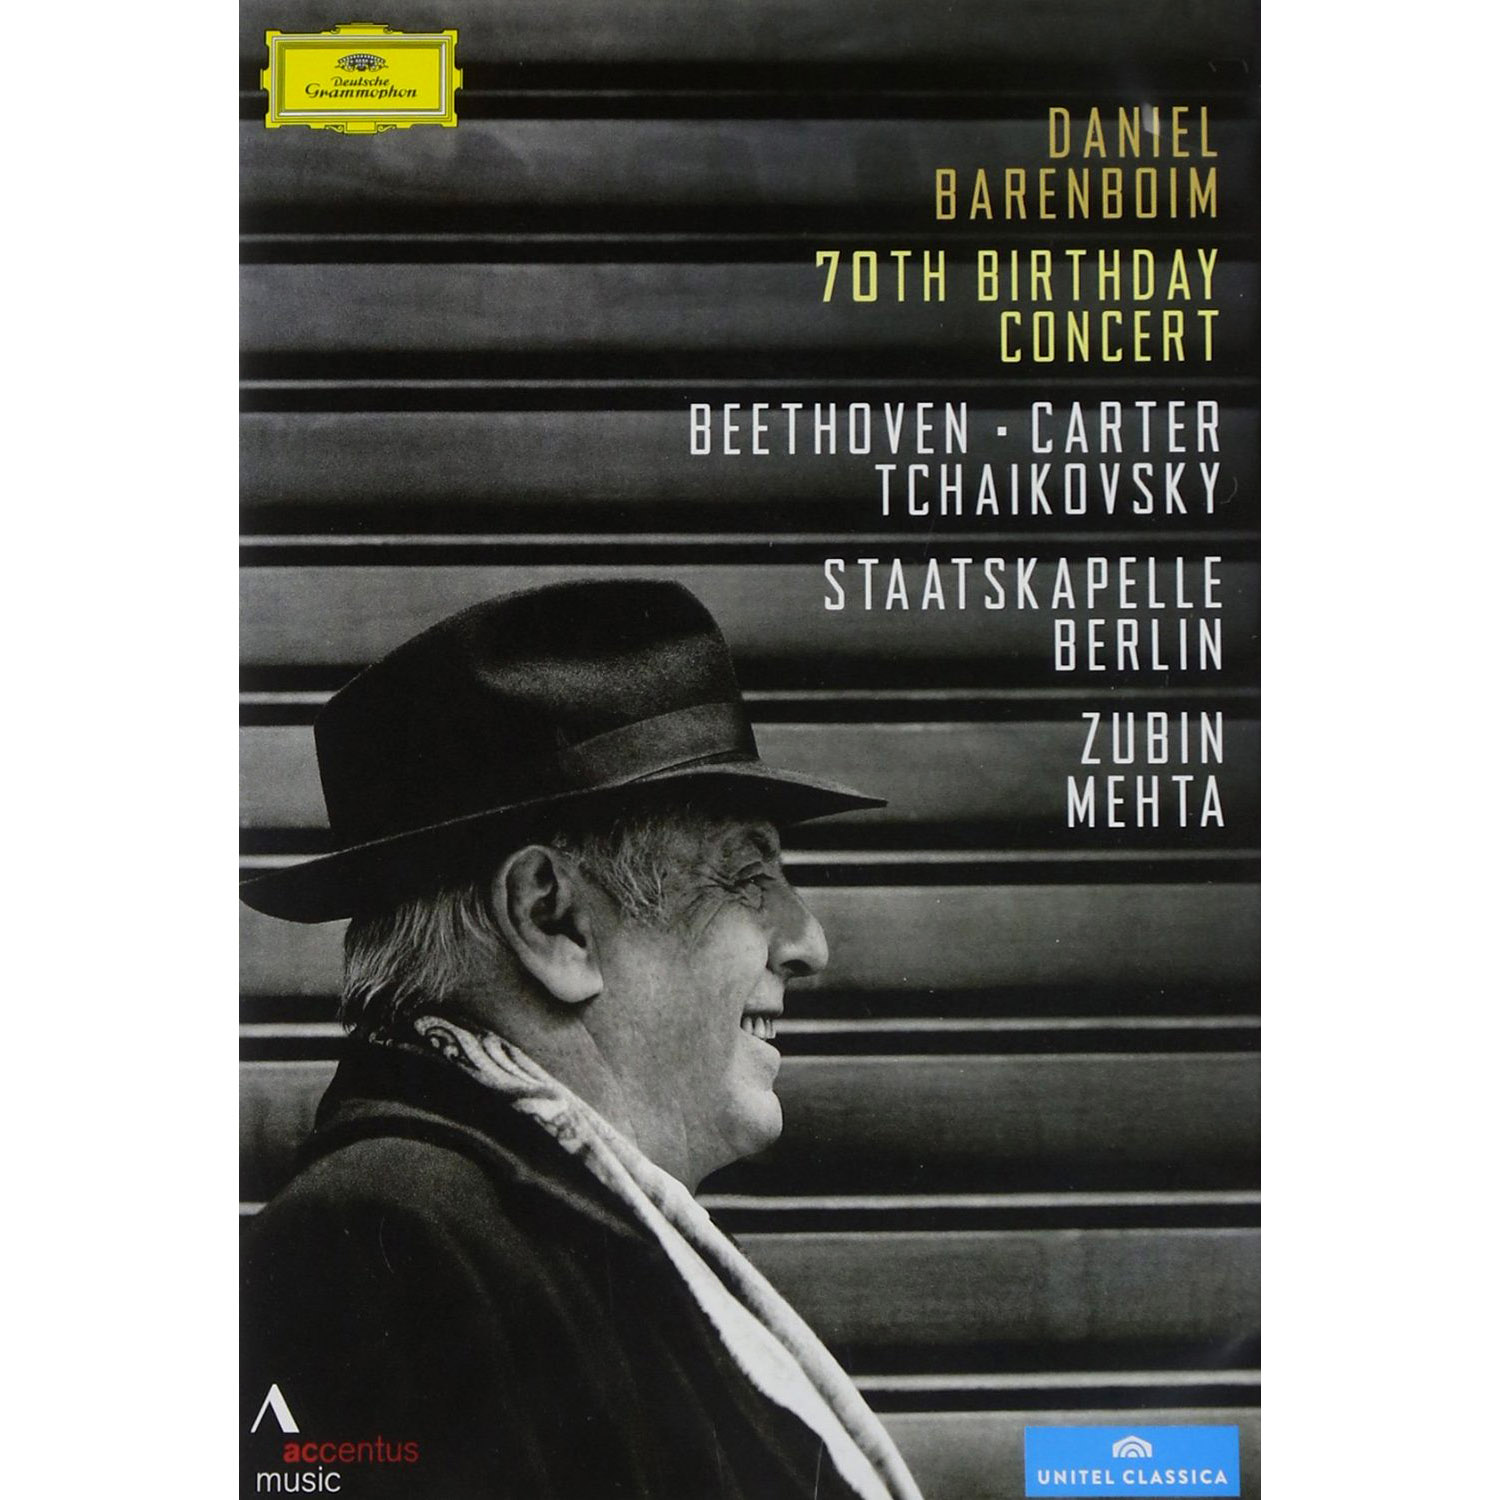 70th Birthday Concert – Daniel Barenboim